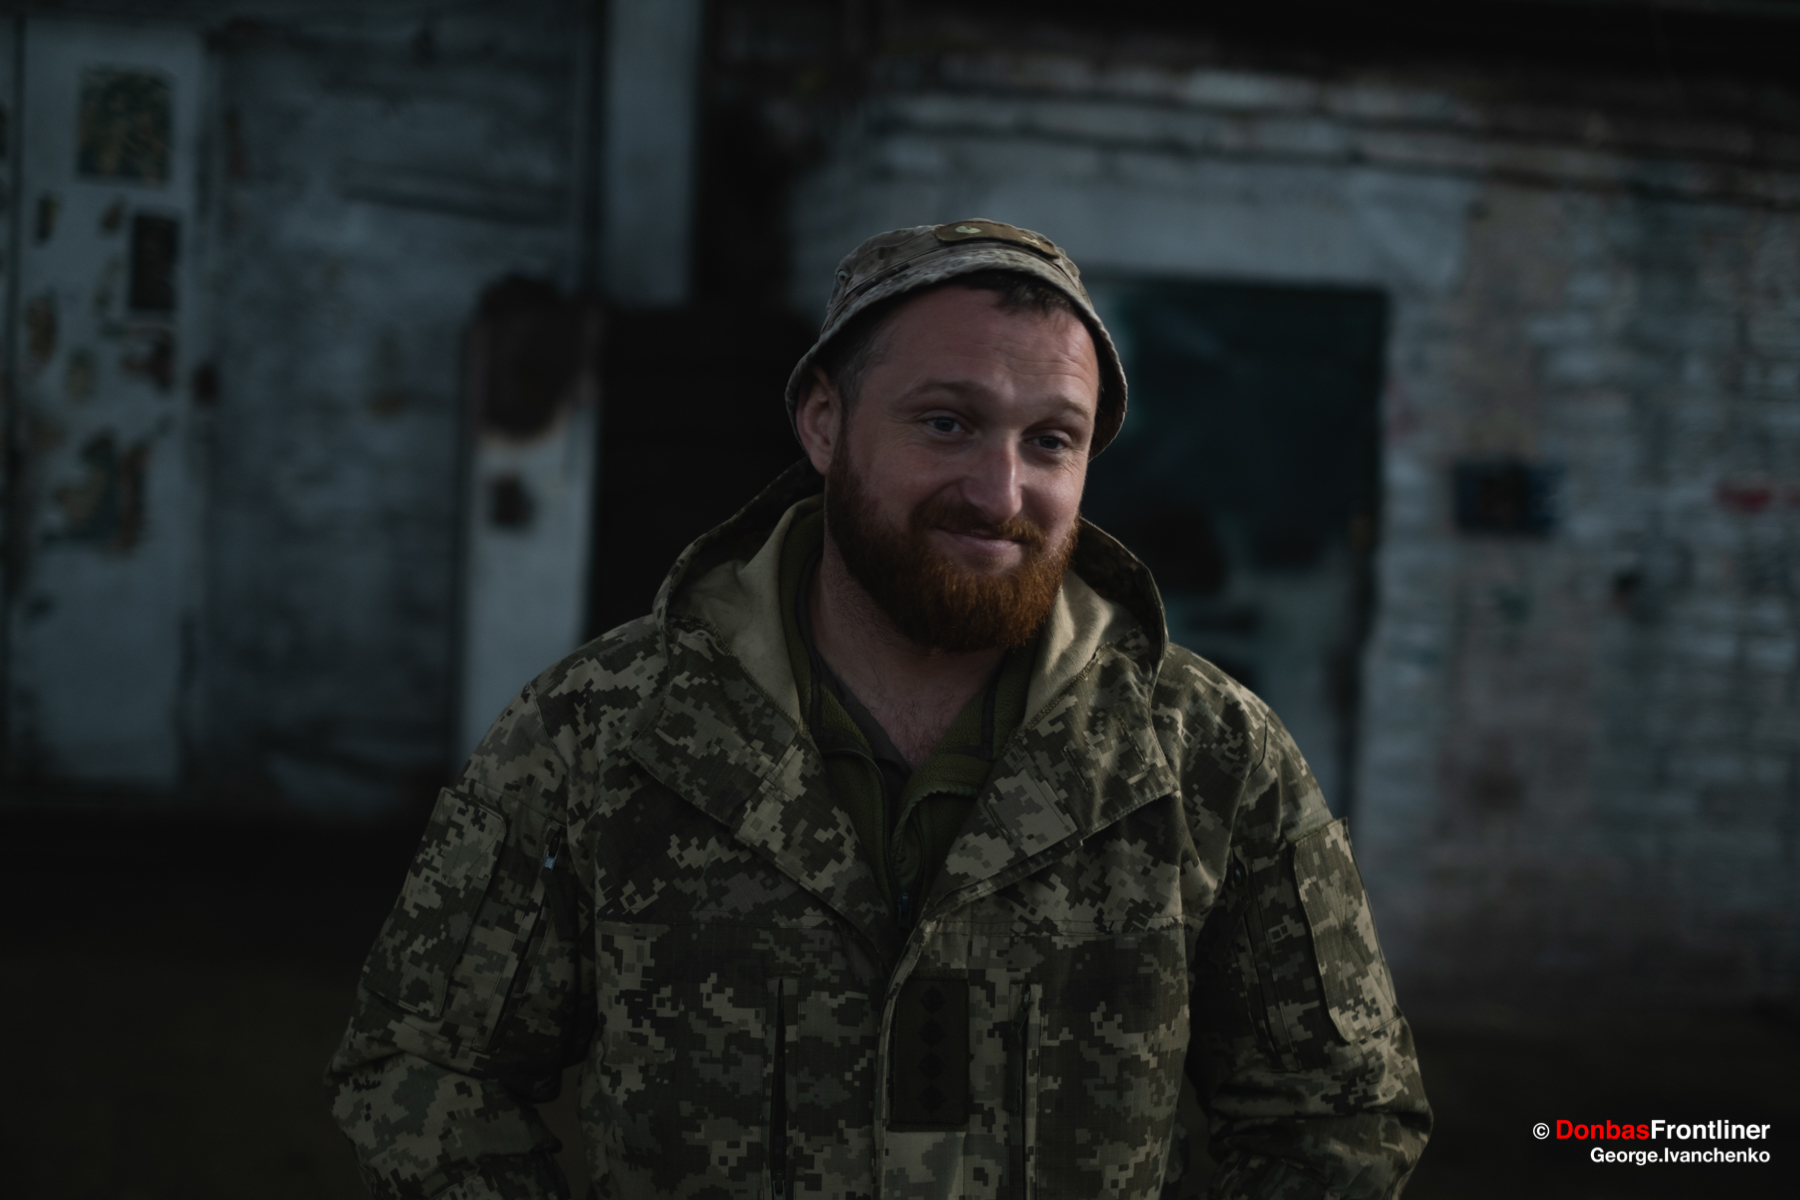 Donbas Frontliner / Роман, командир ремонтної роти 80-ої окремої десантно-штурмової бригади